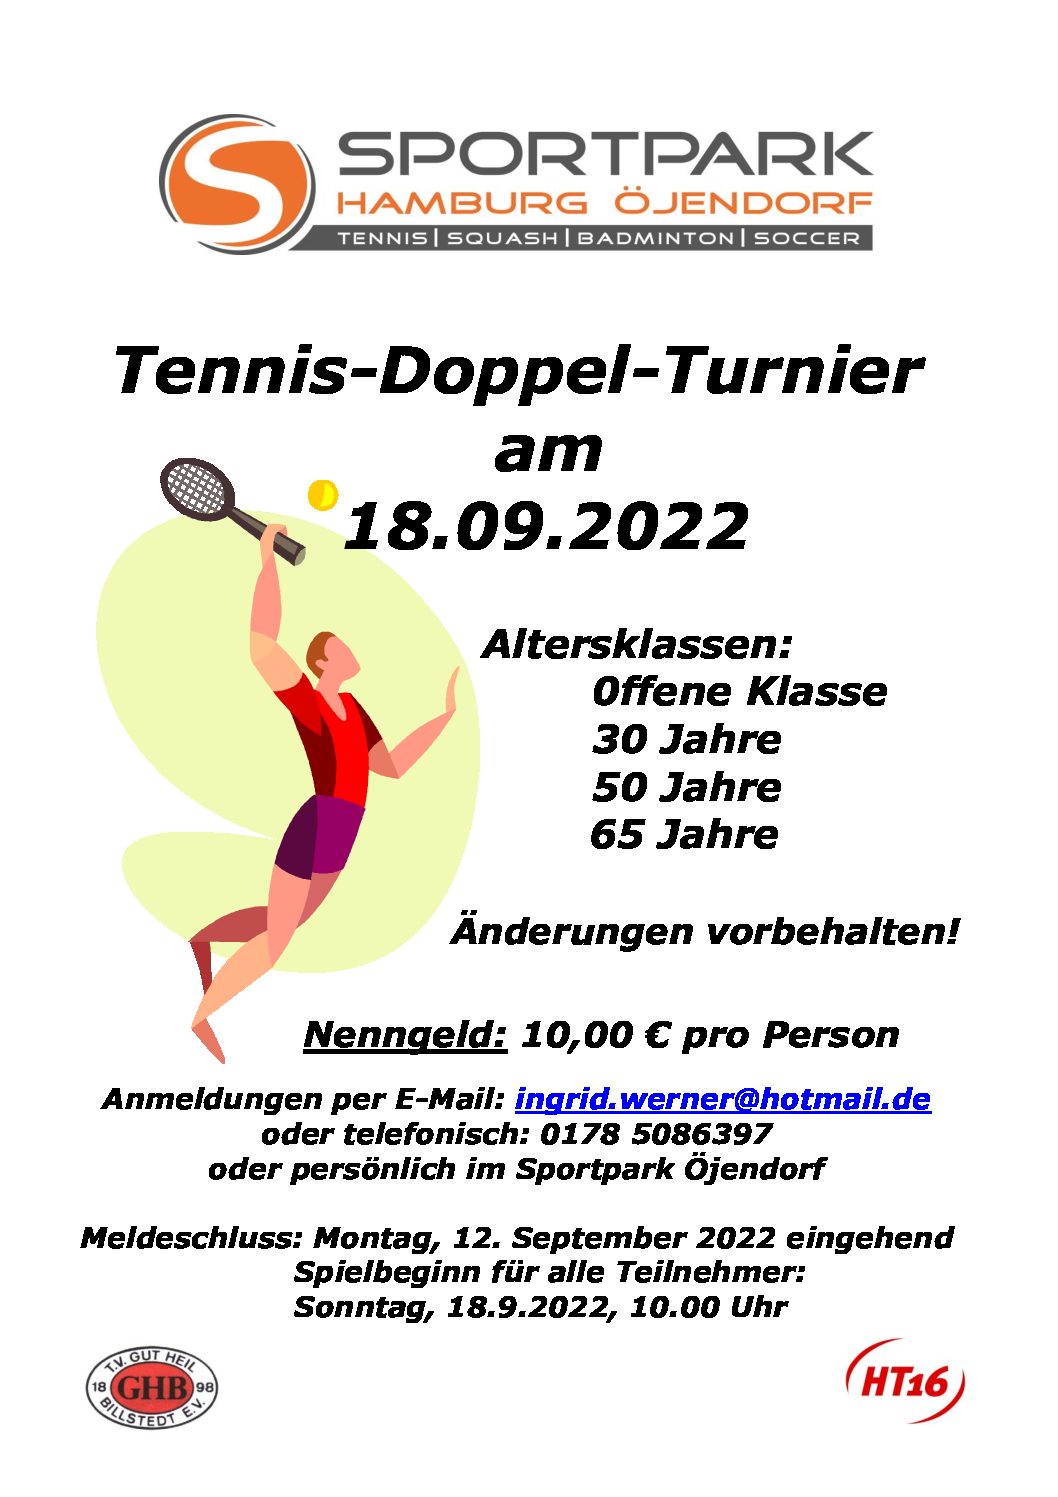 Sportpark Tennis Doppel Turnier am 18.09.2022